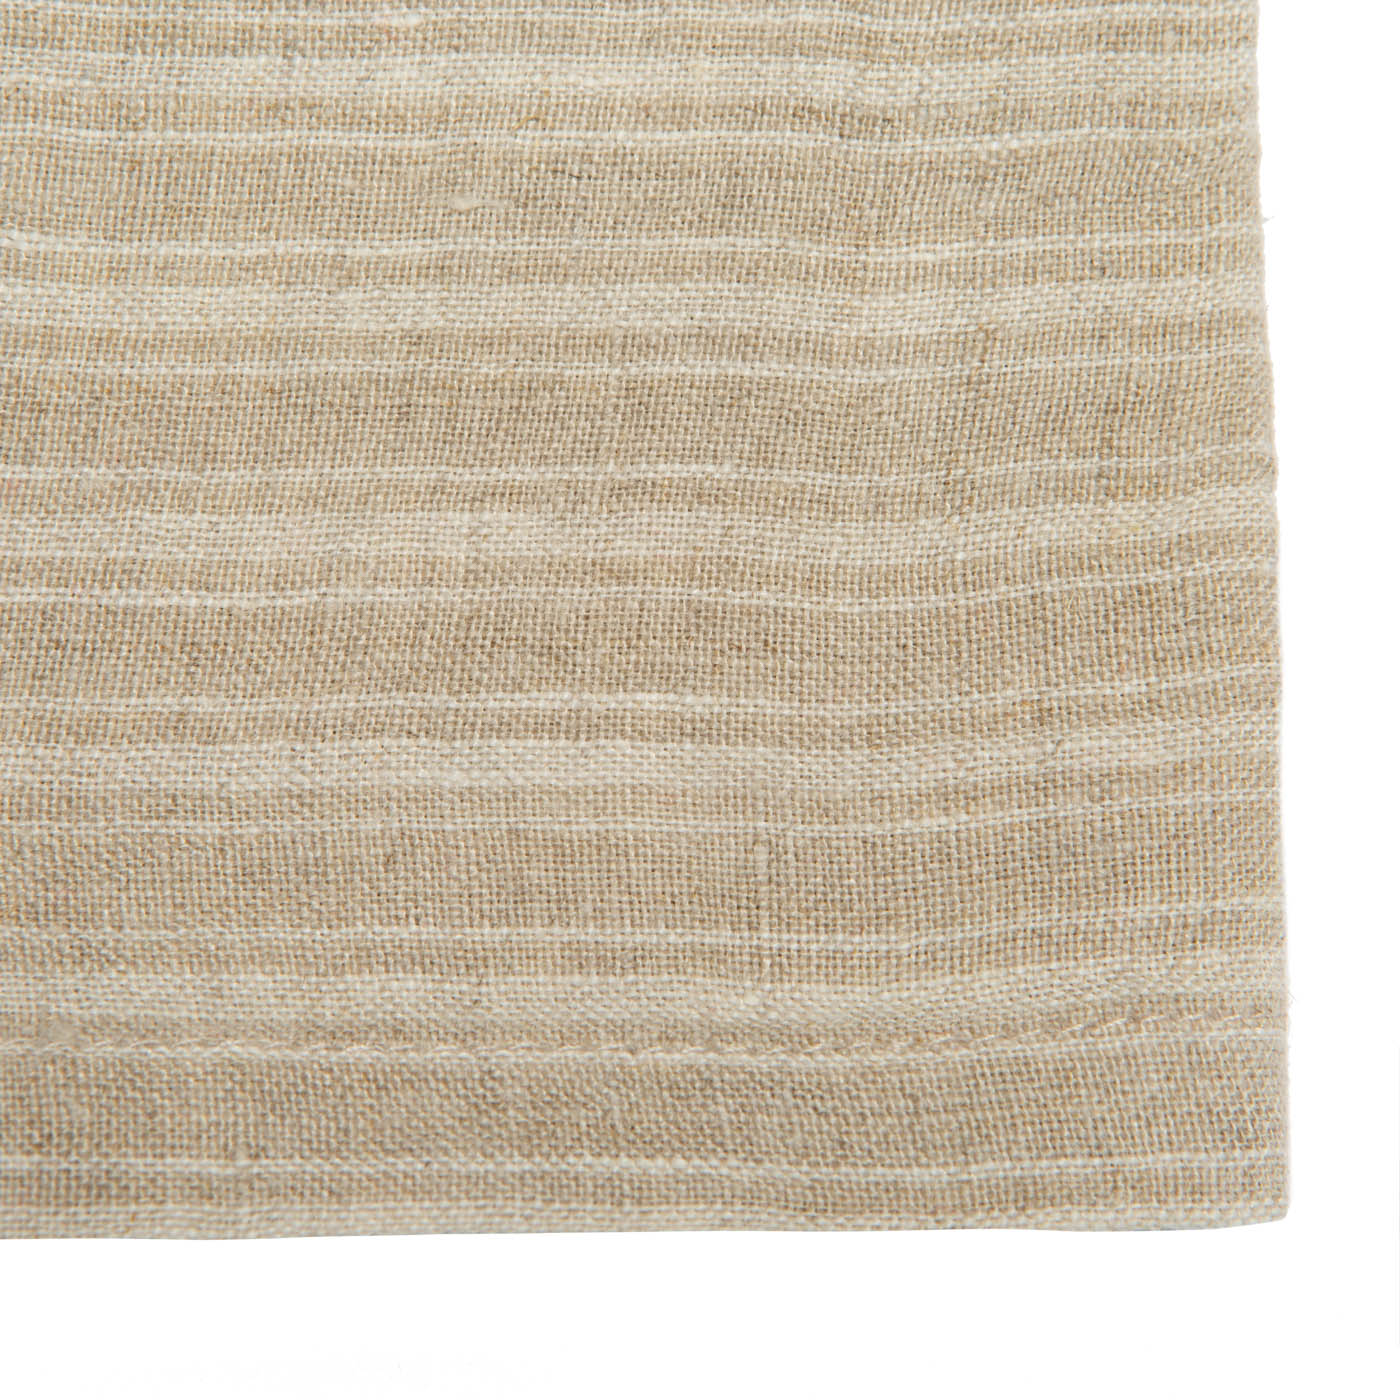 Boat Stripe Linen Kitchen Towels Natural & White, Set of 2